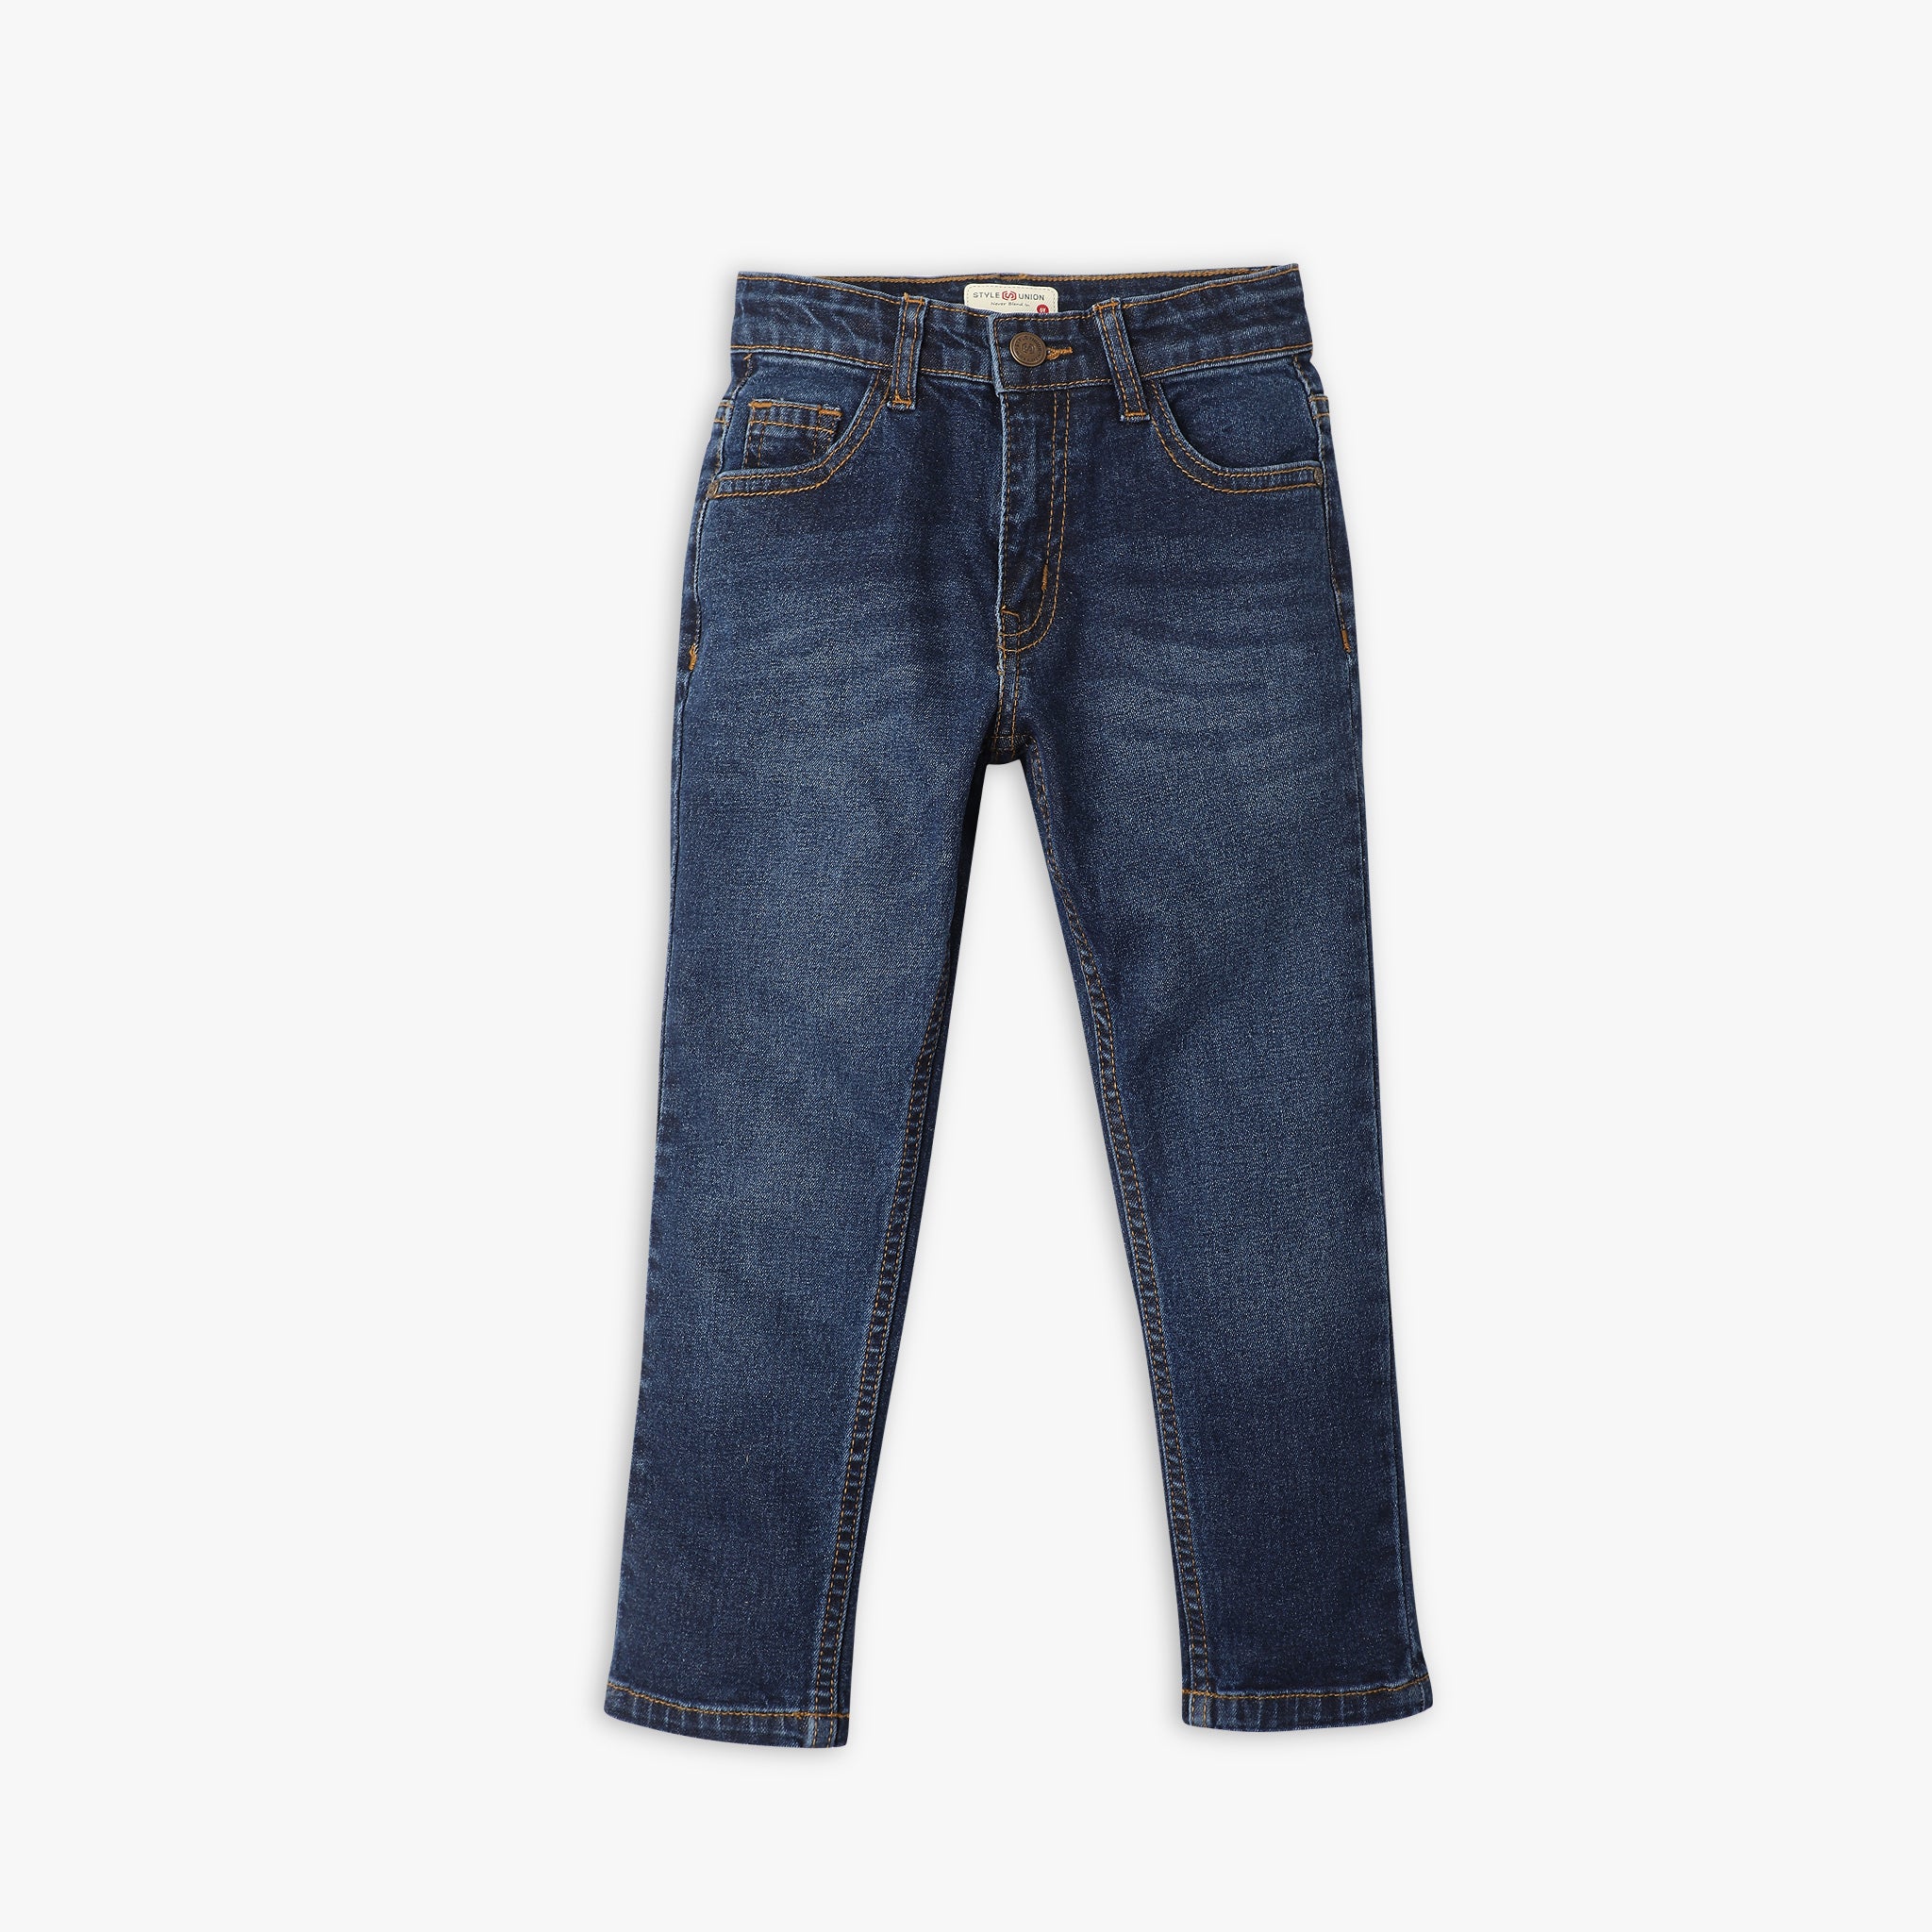 Boys Jeans Kids Stretch Slim Designer Stylish Fashion Denim Ripped Faded  New | eBay